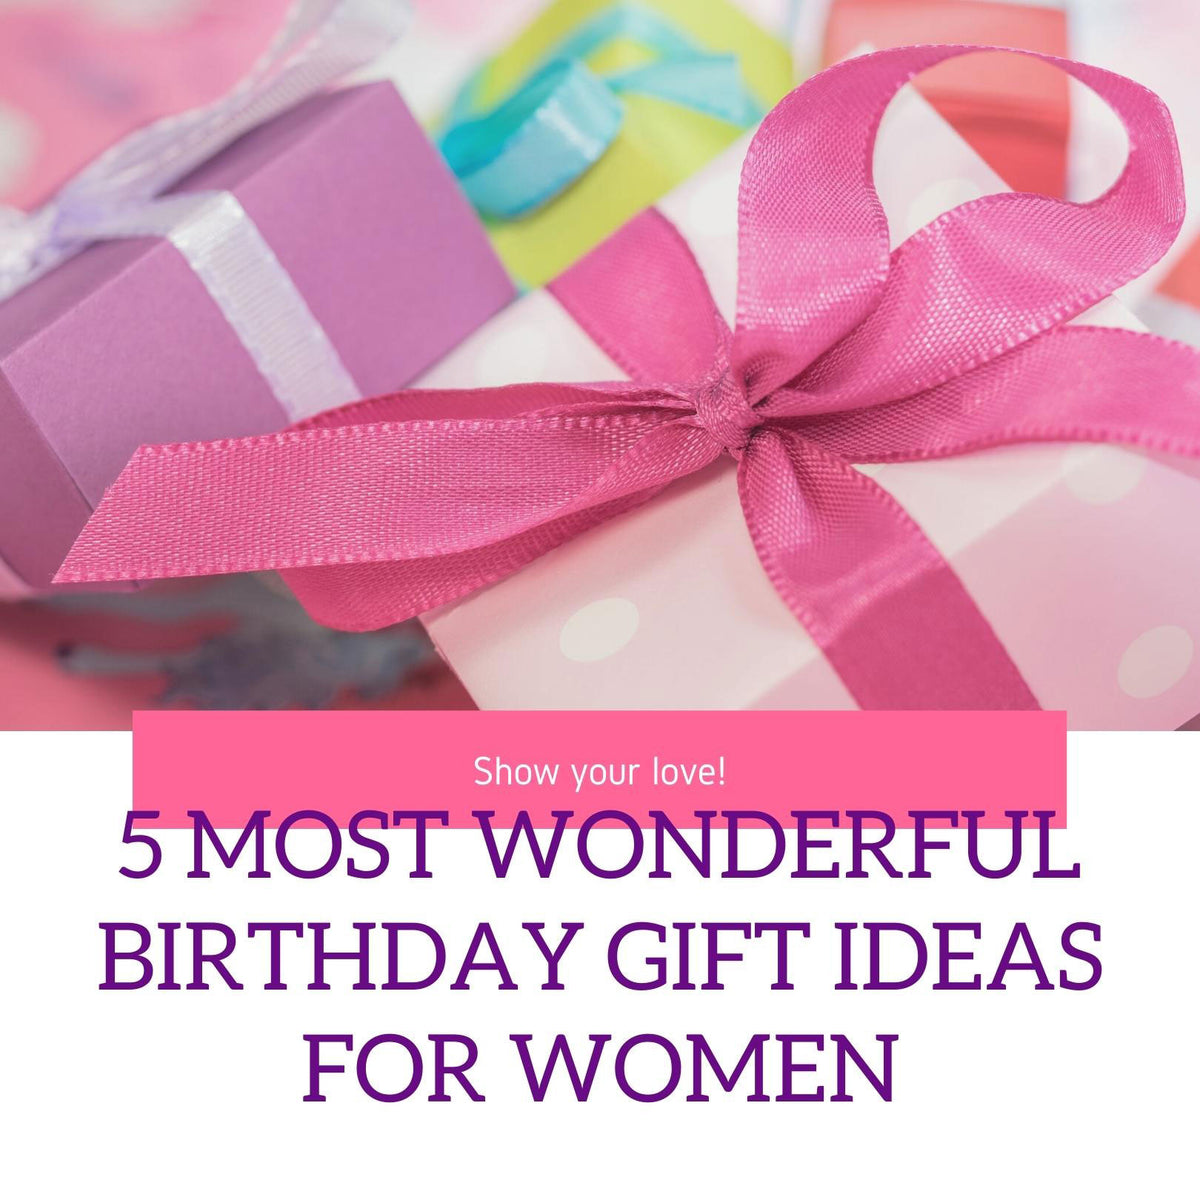 5 Most Wonderful Birthday Gift Ideas for Women